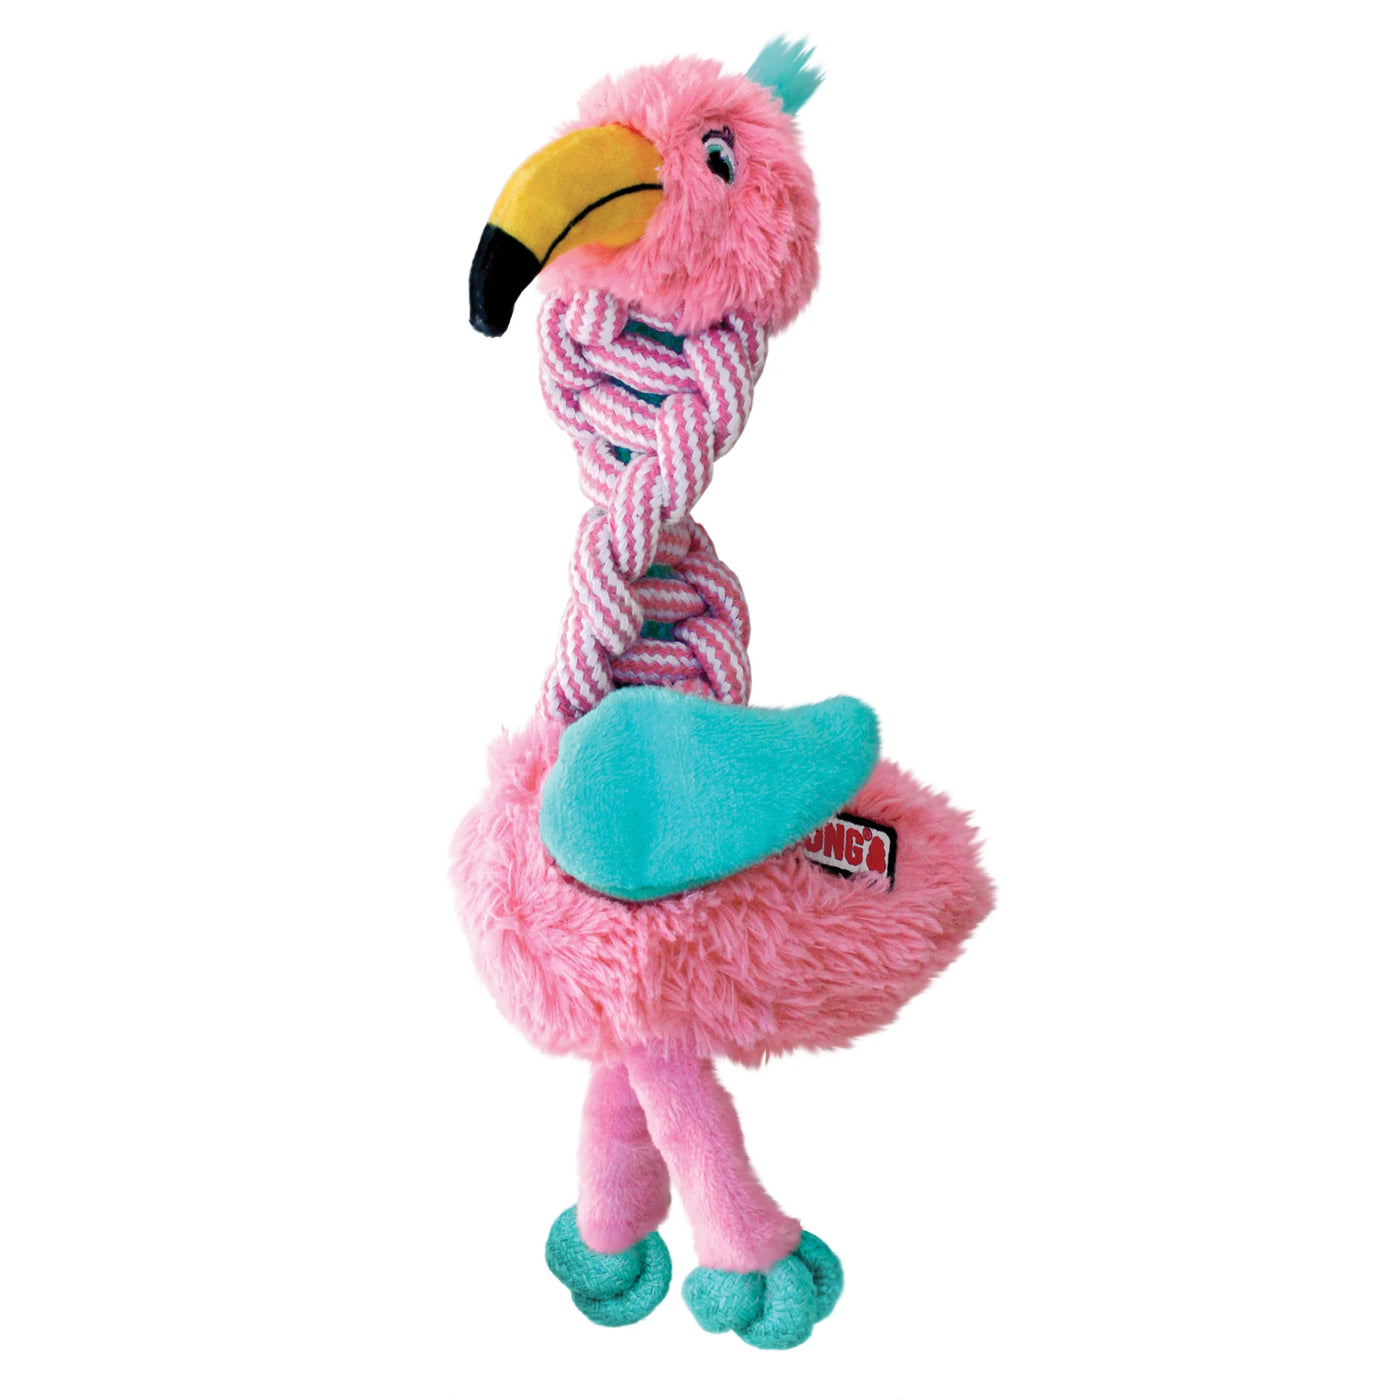 KONG Knots Twists Flamingo/Giraffe